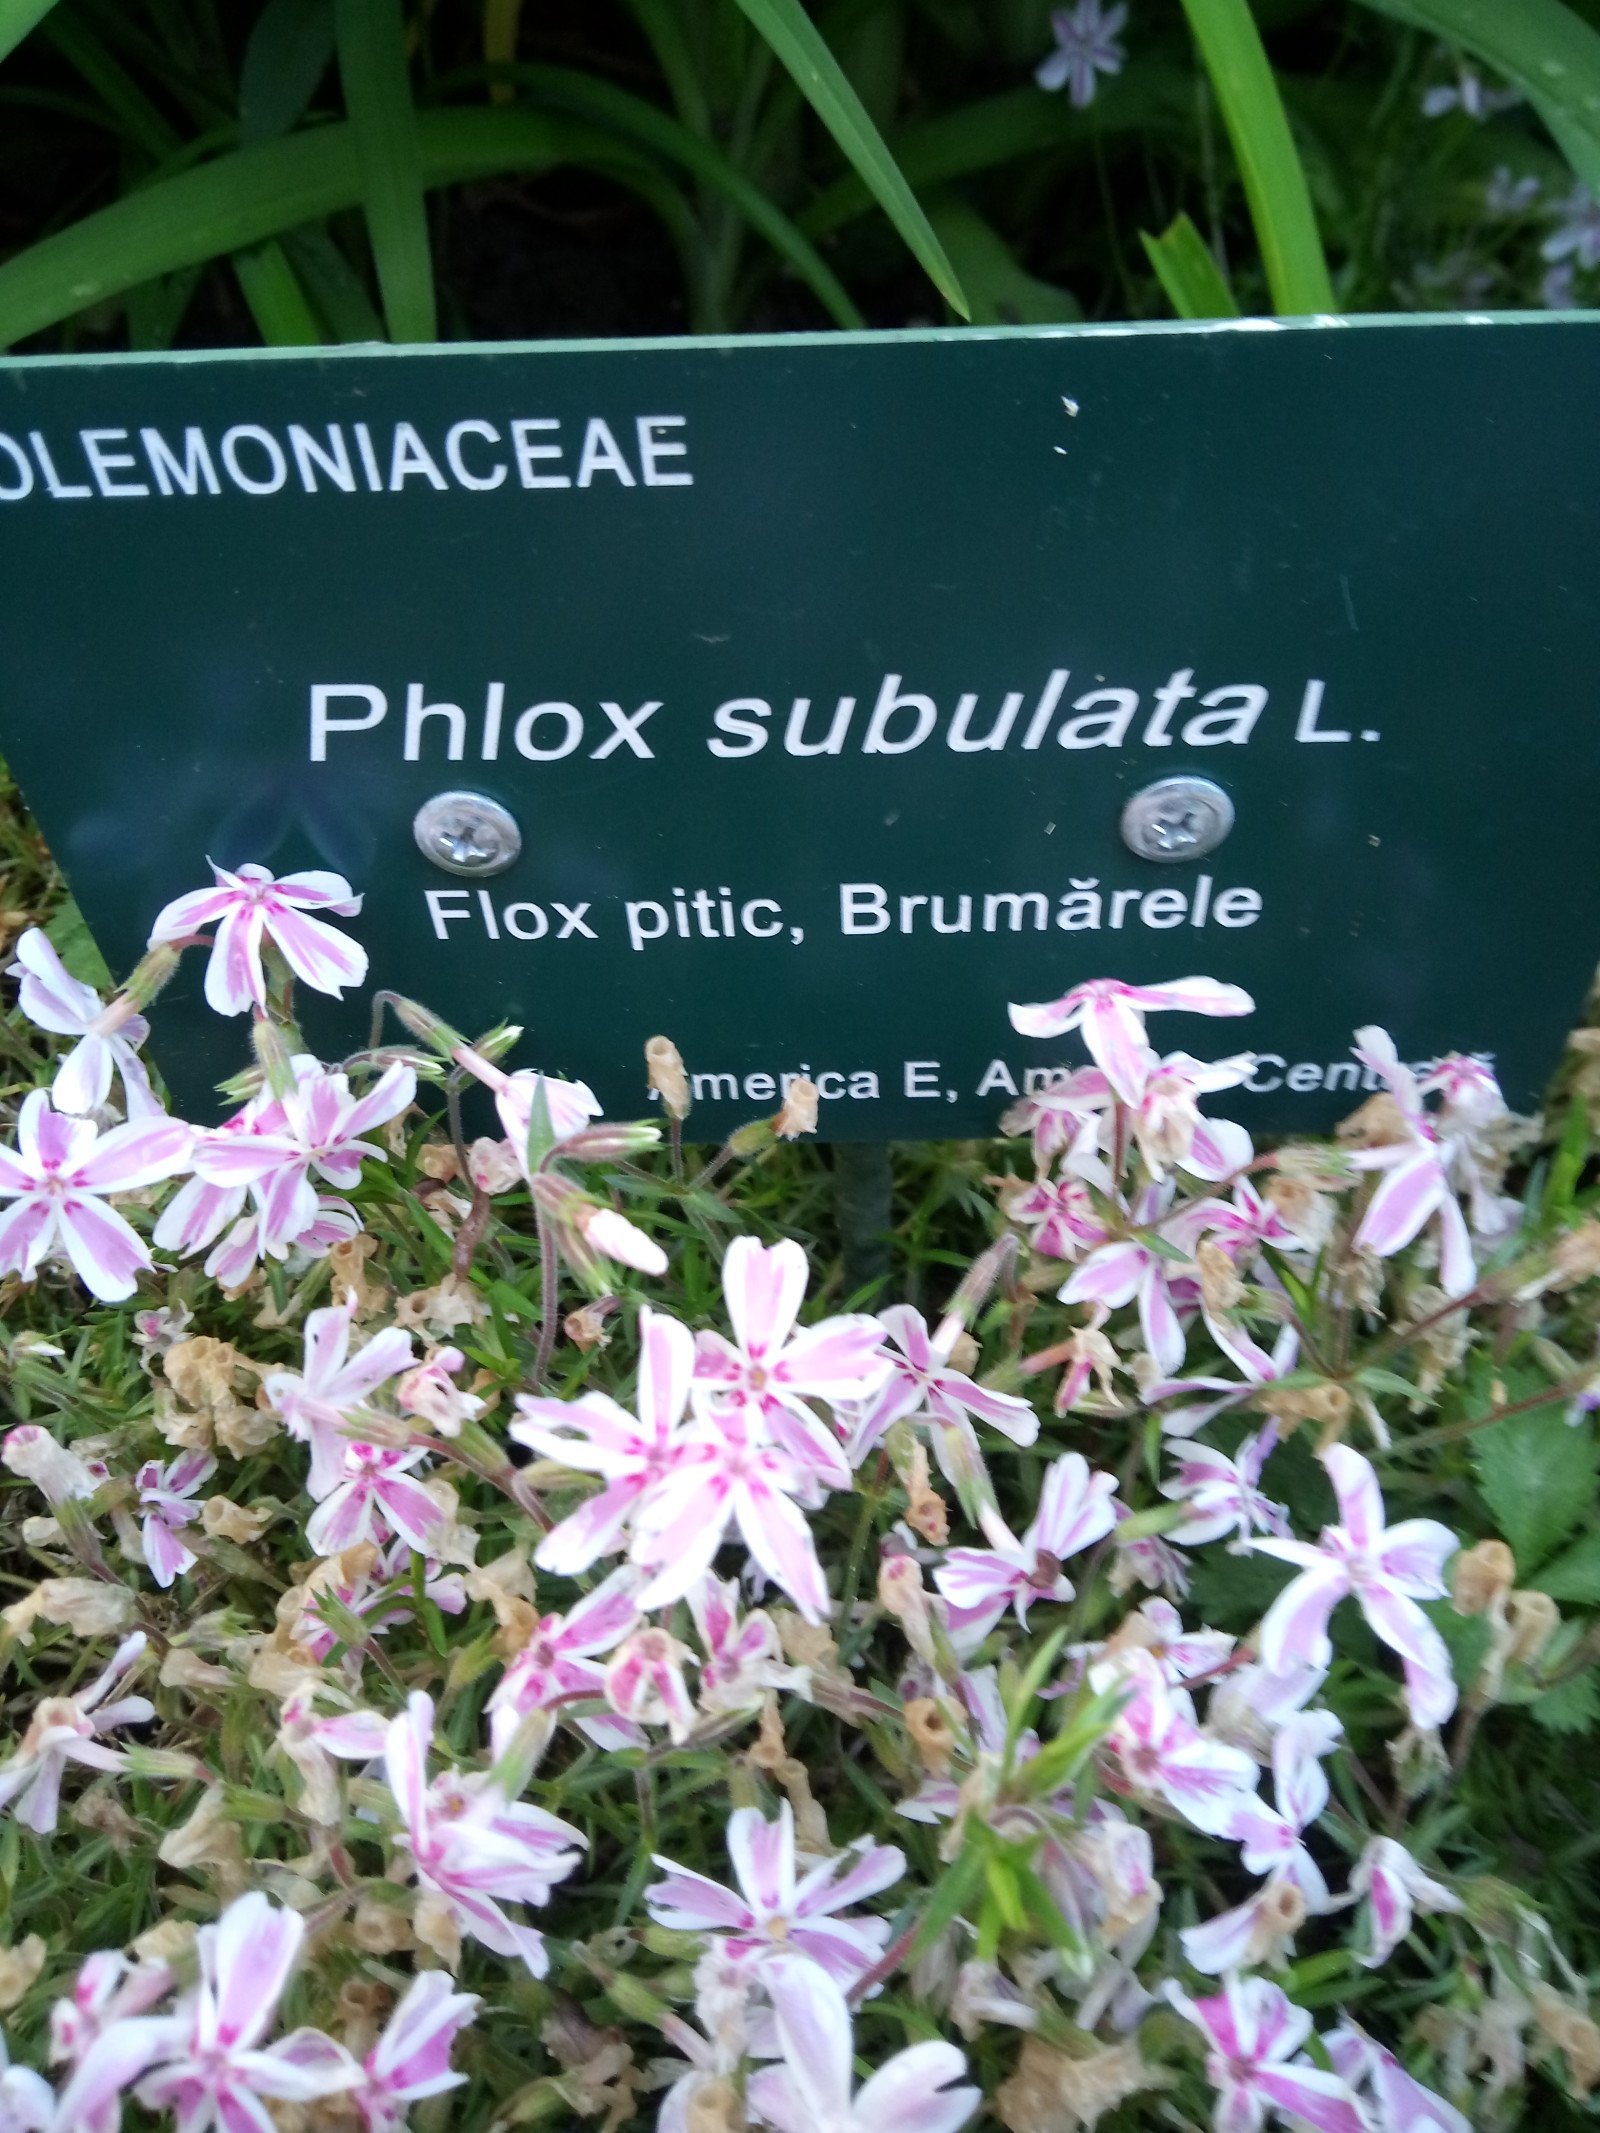 Phlox subulata - Entire plant